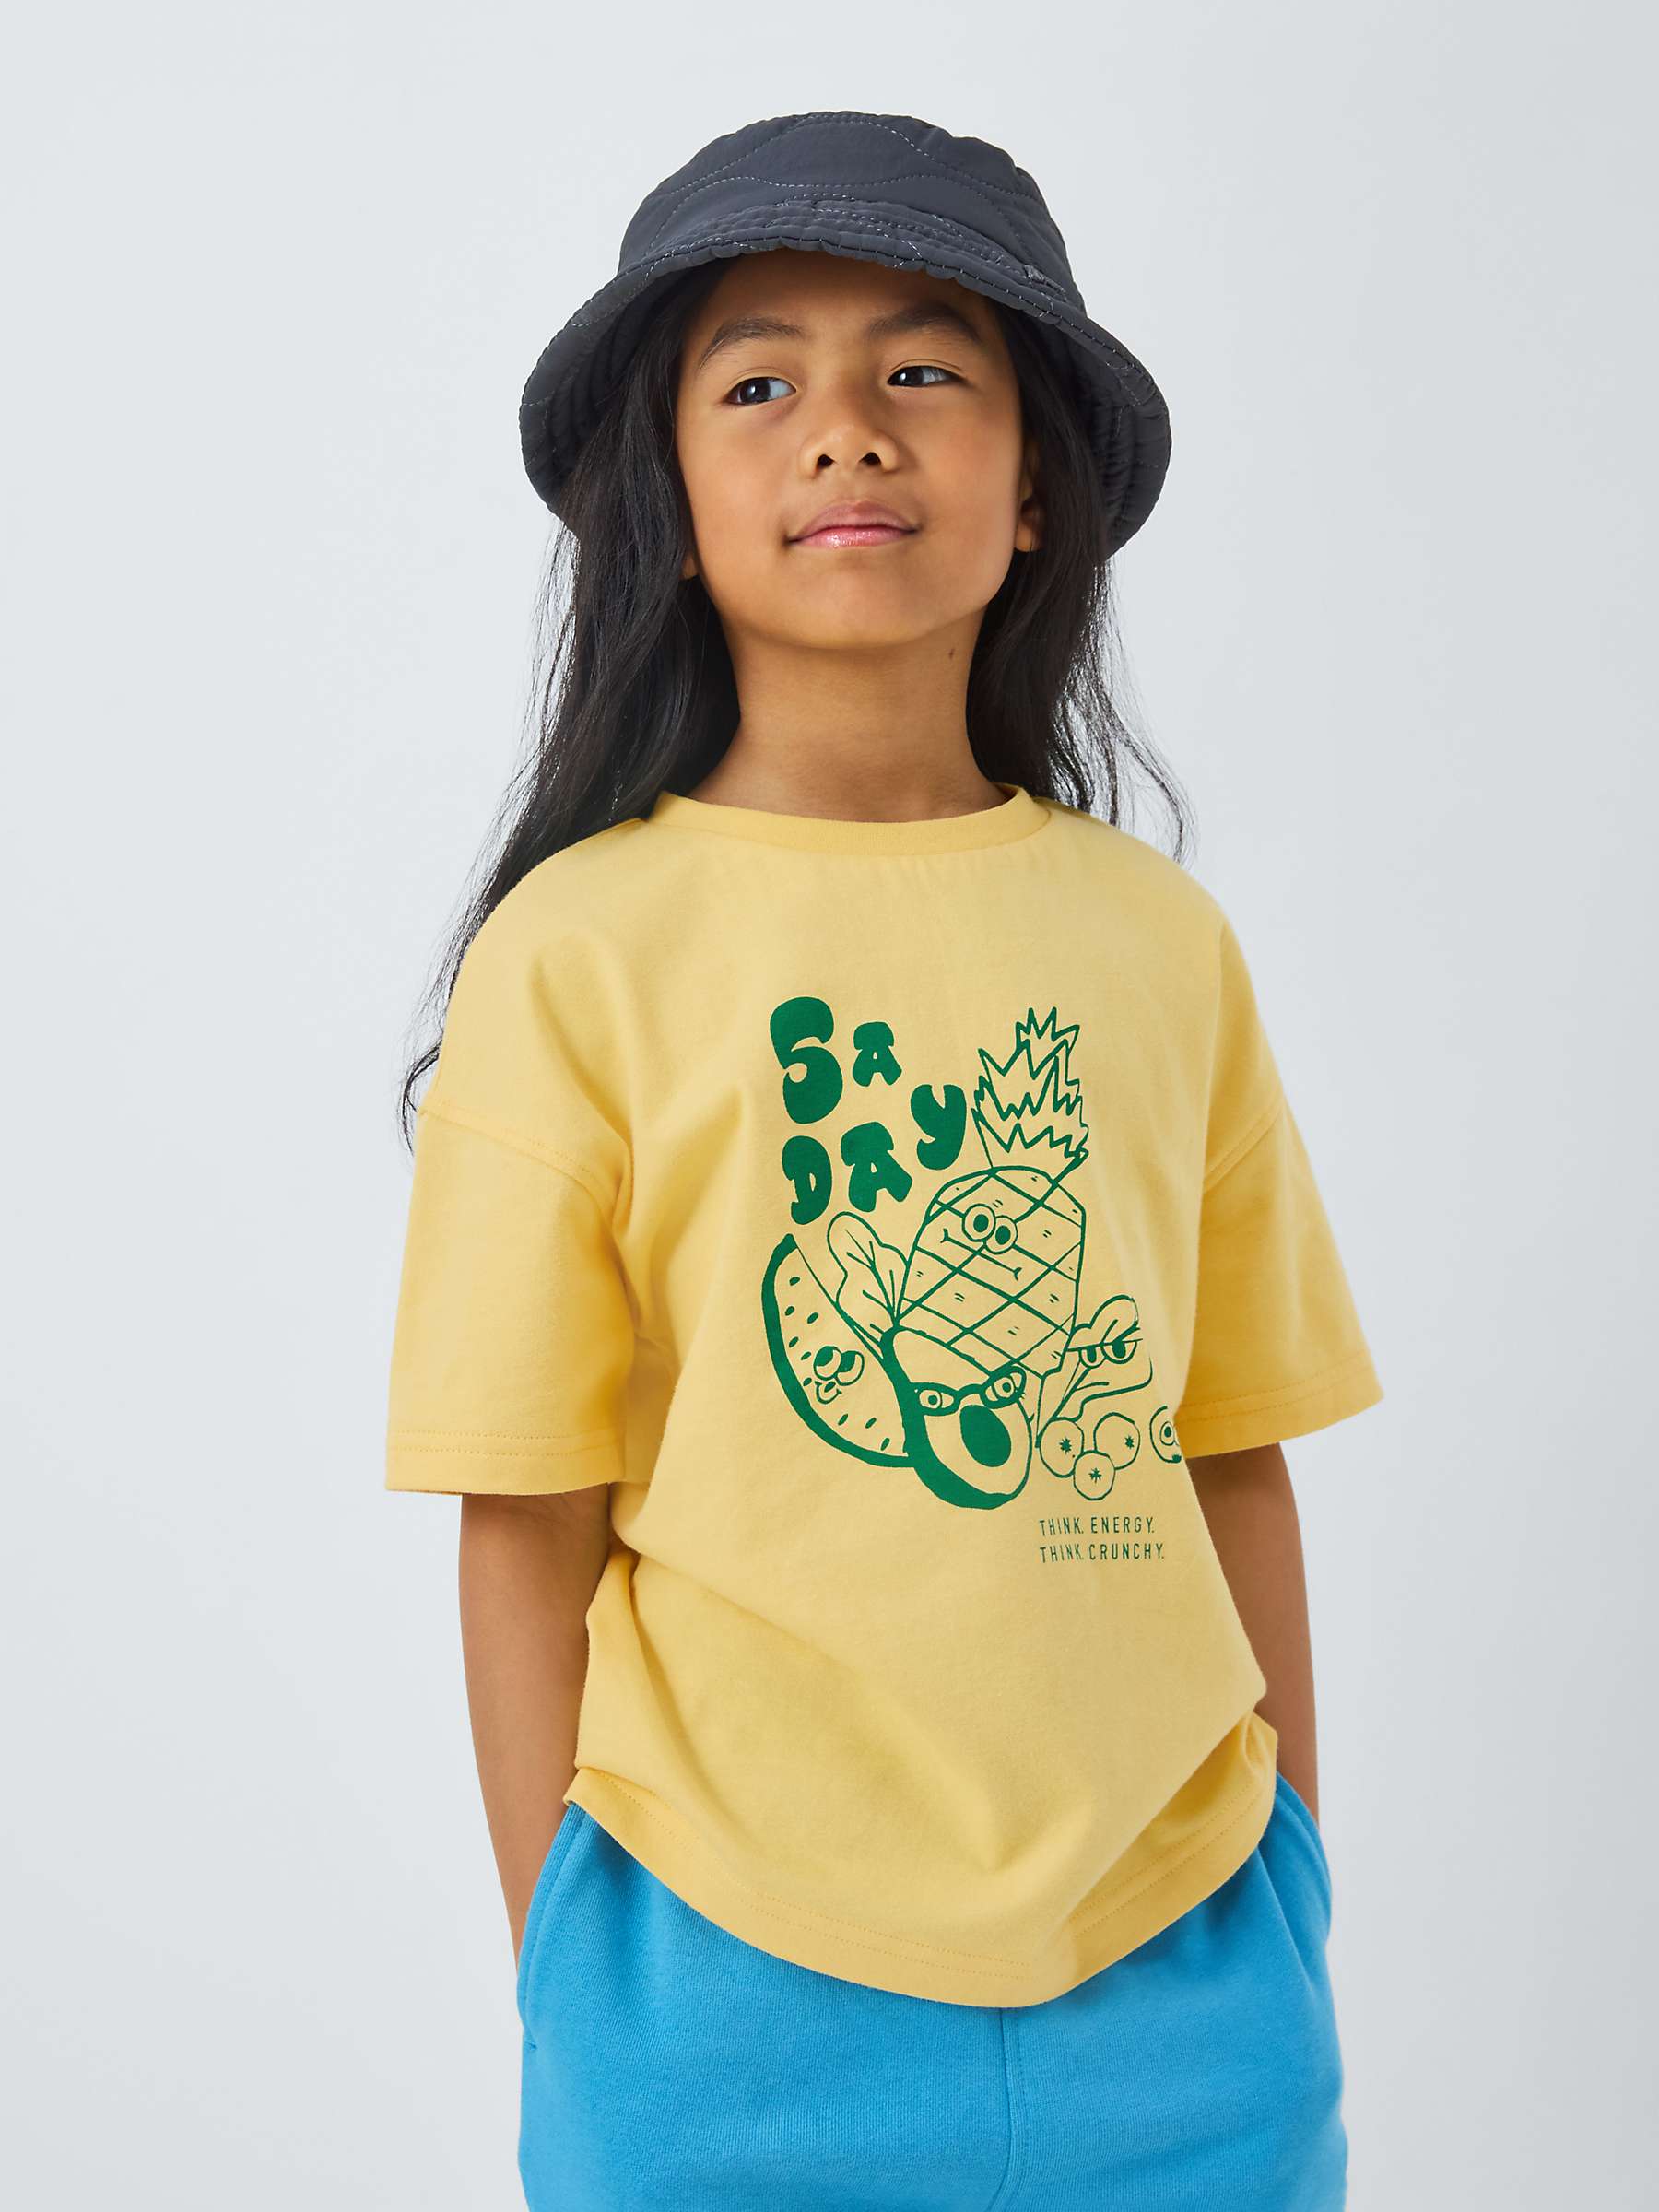 Buy John Lewis ANYDAY Kids' 5 a Day T-Shirt, Sundress Online at johnlewis.com